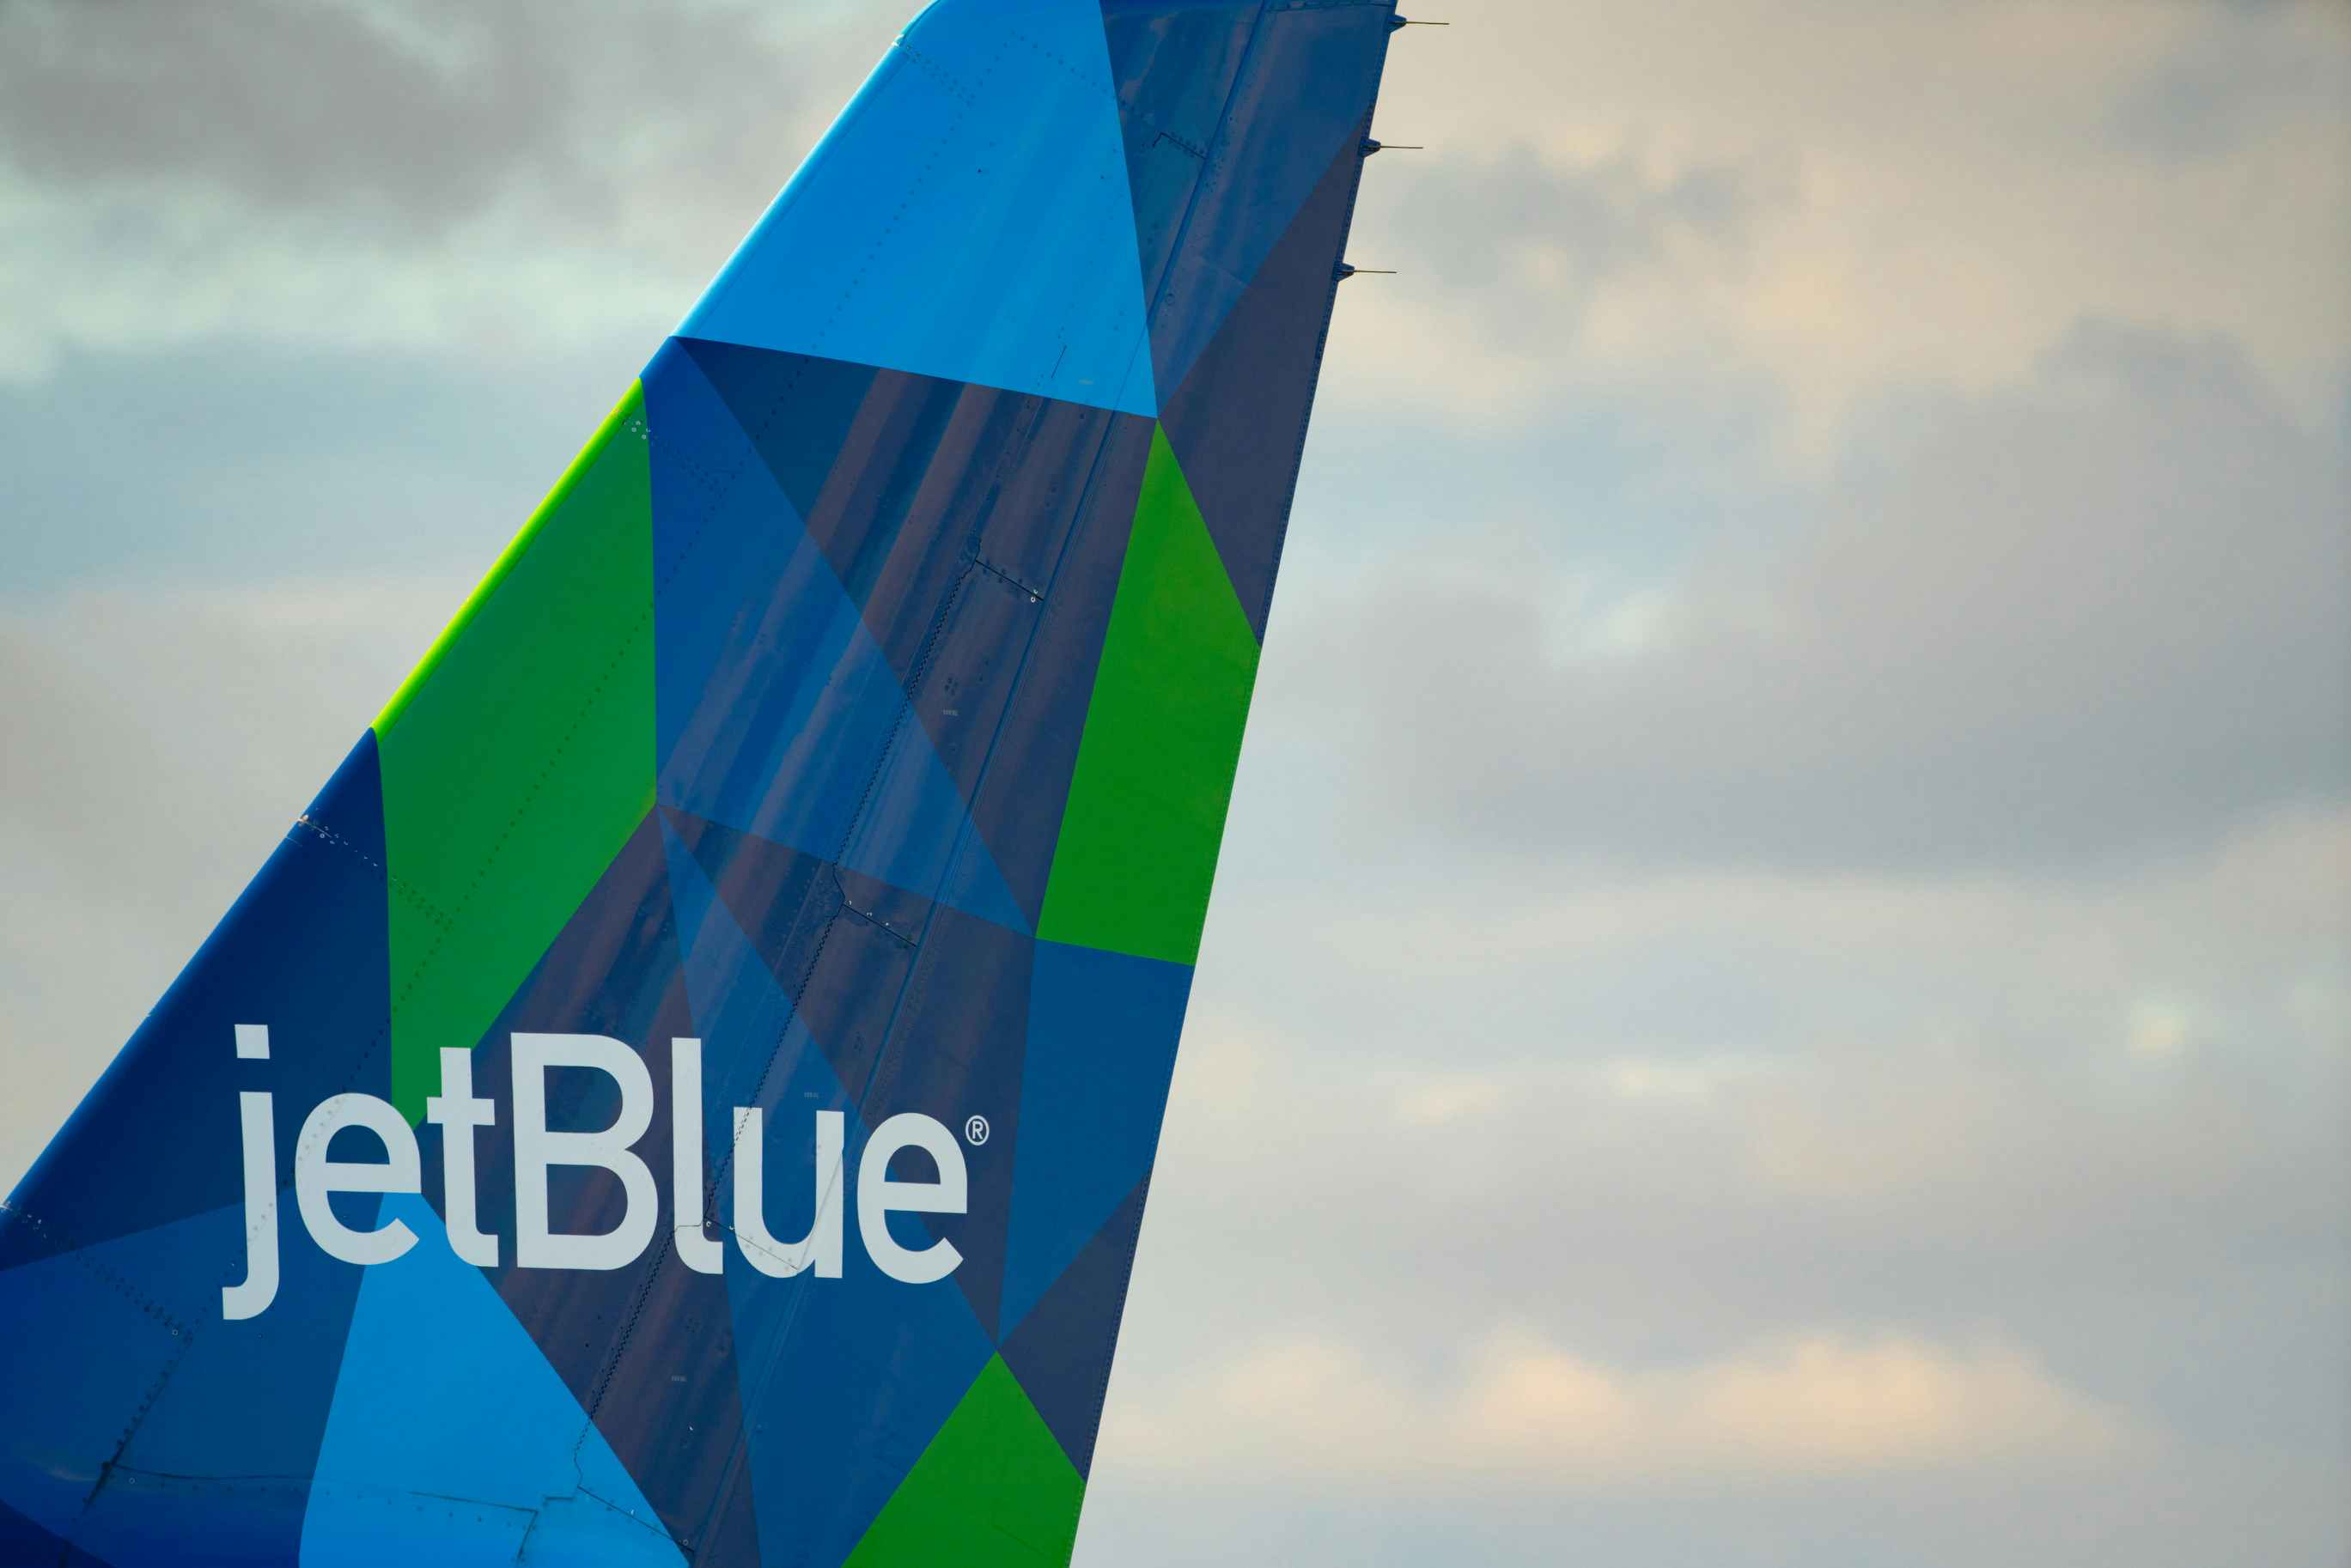 A JetBlue airplane tail with company logo